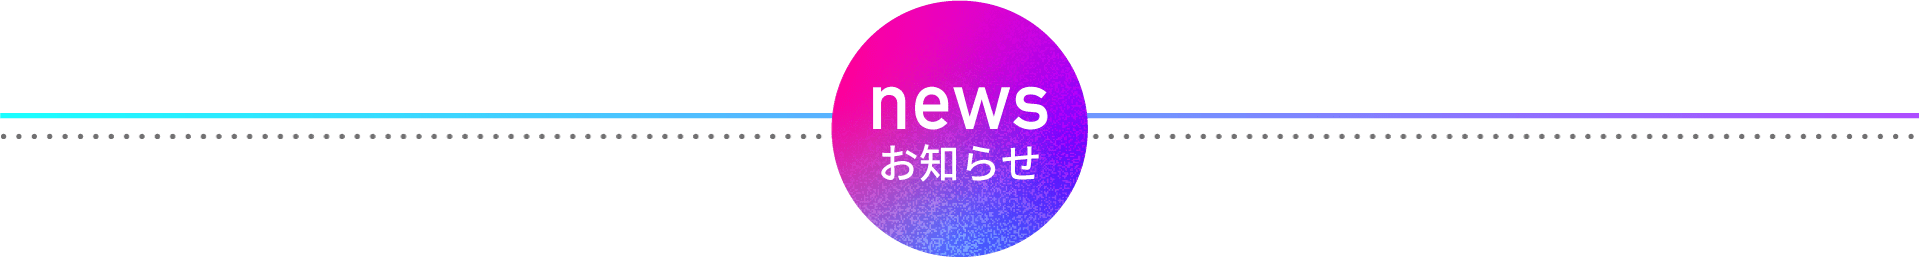 00_news_01